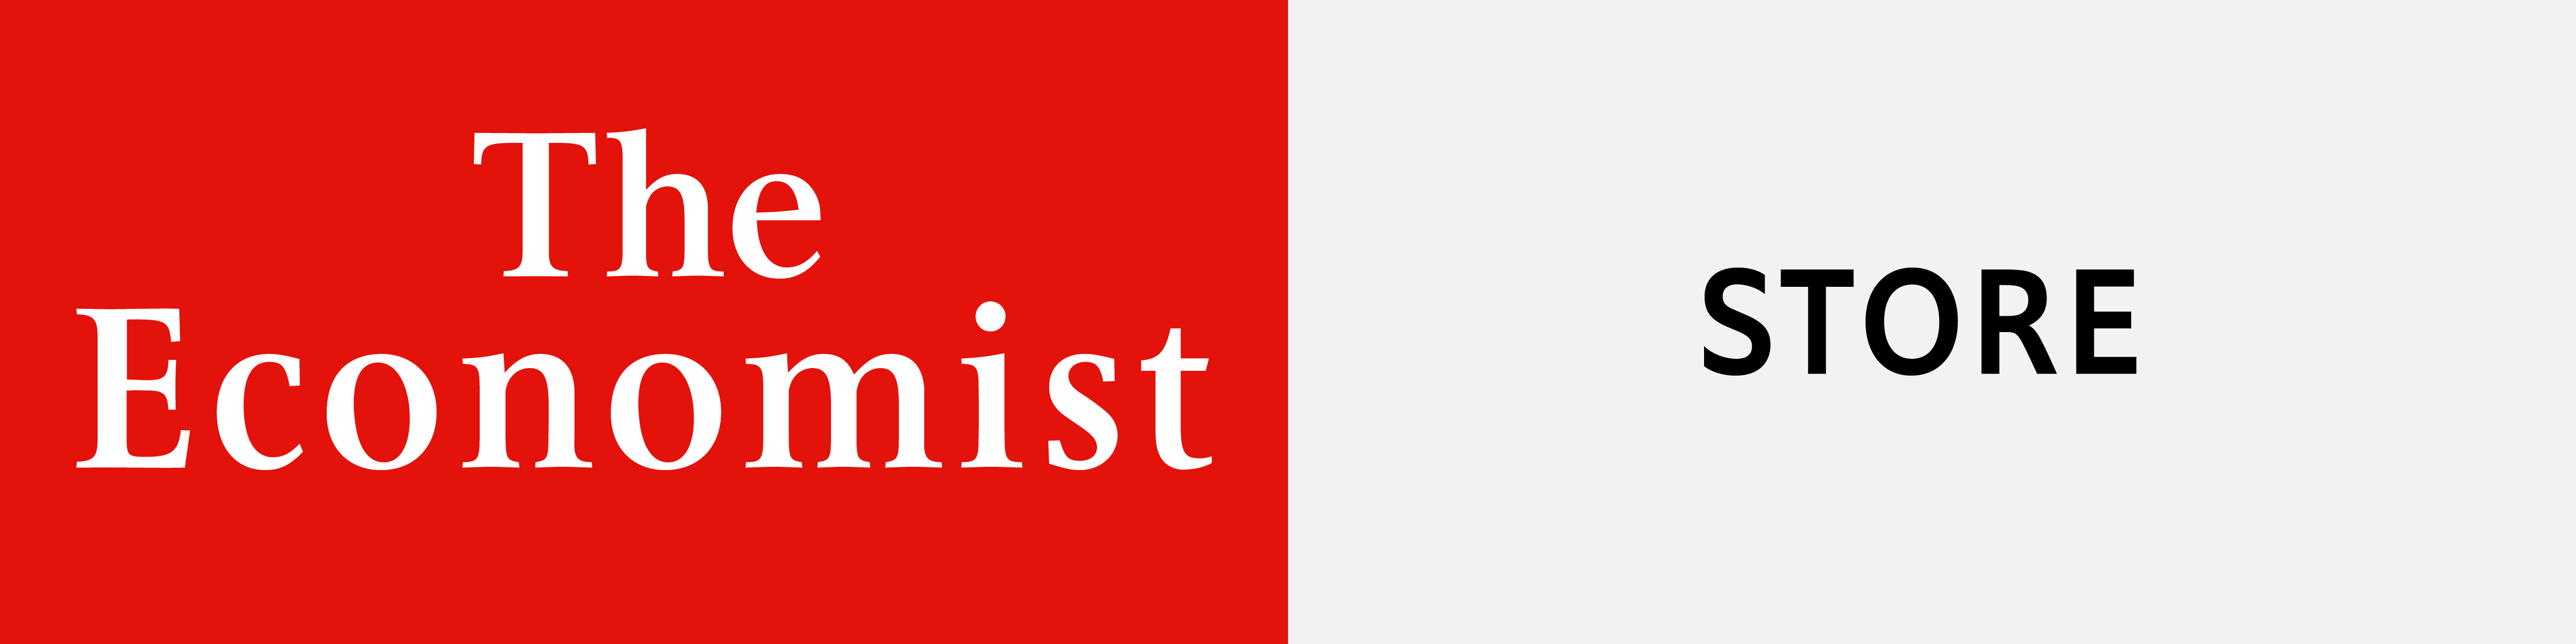 The Economist Logo - Passport Holder – The Economist Store & Economist Diaries